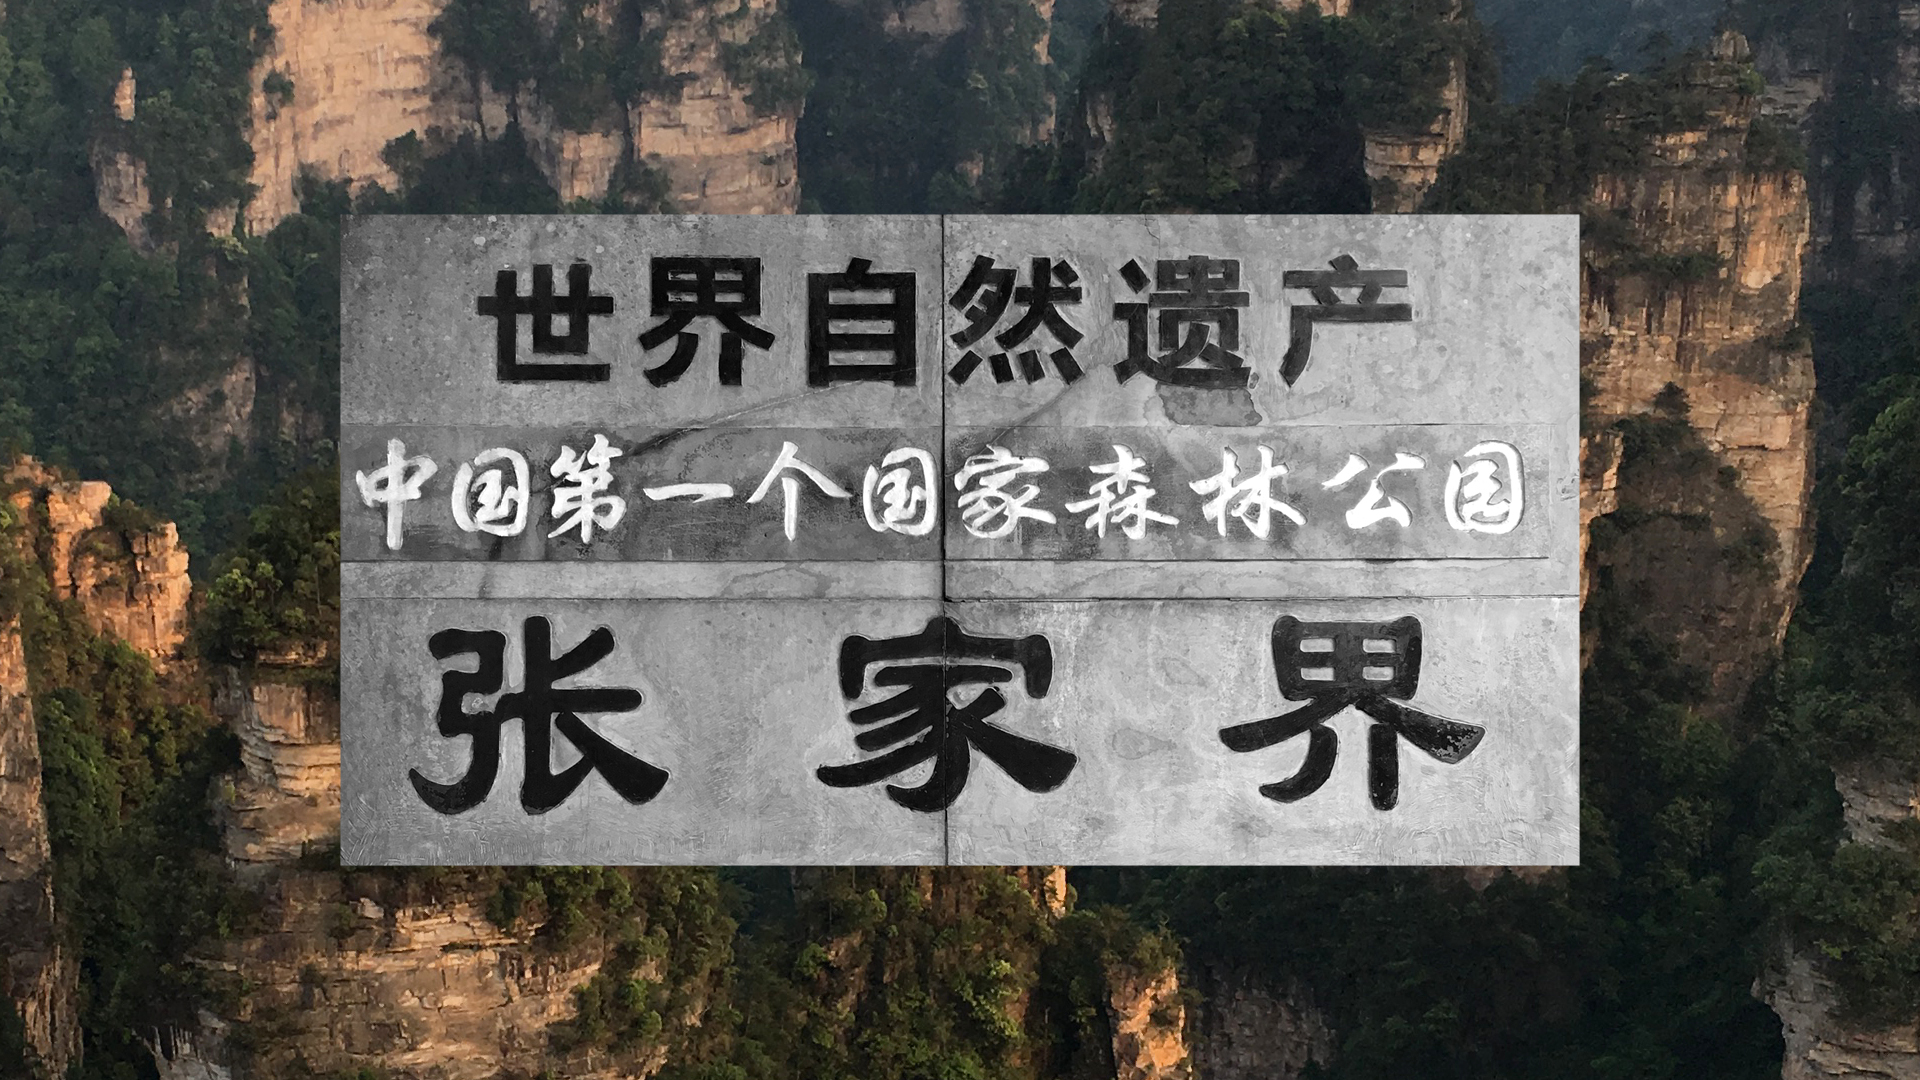 Zhangjiajie Banner Image